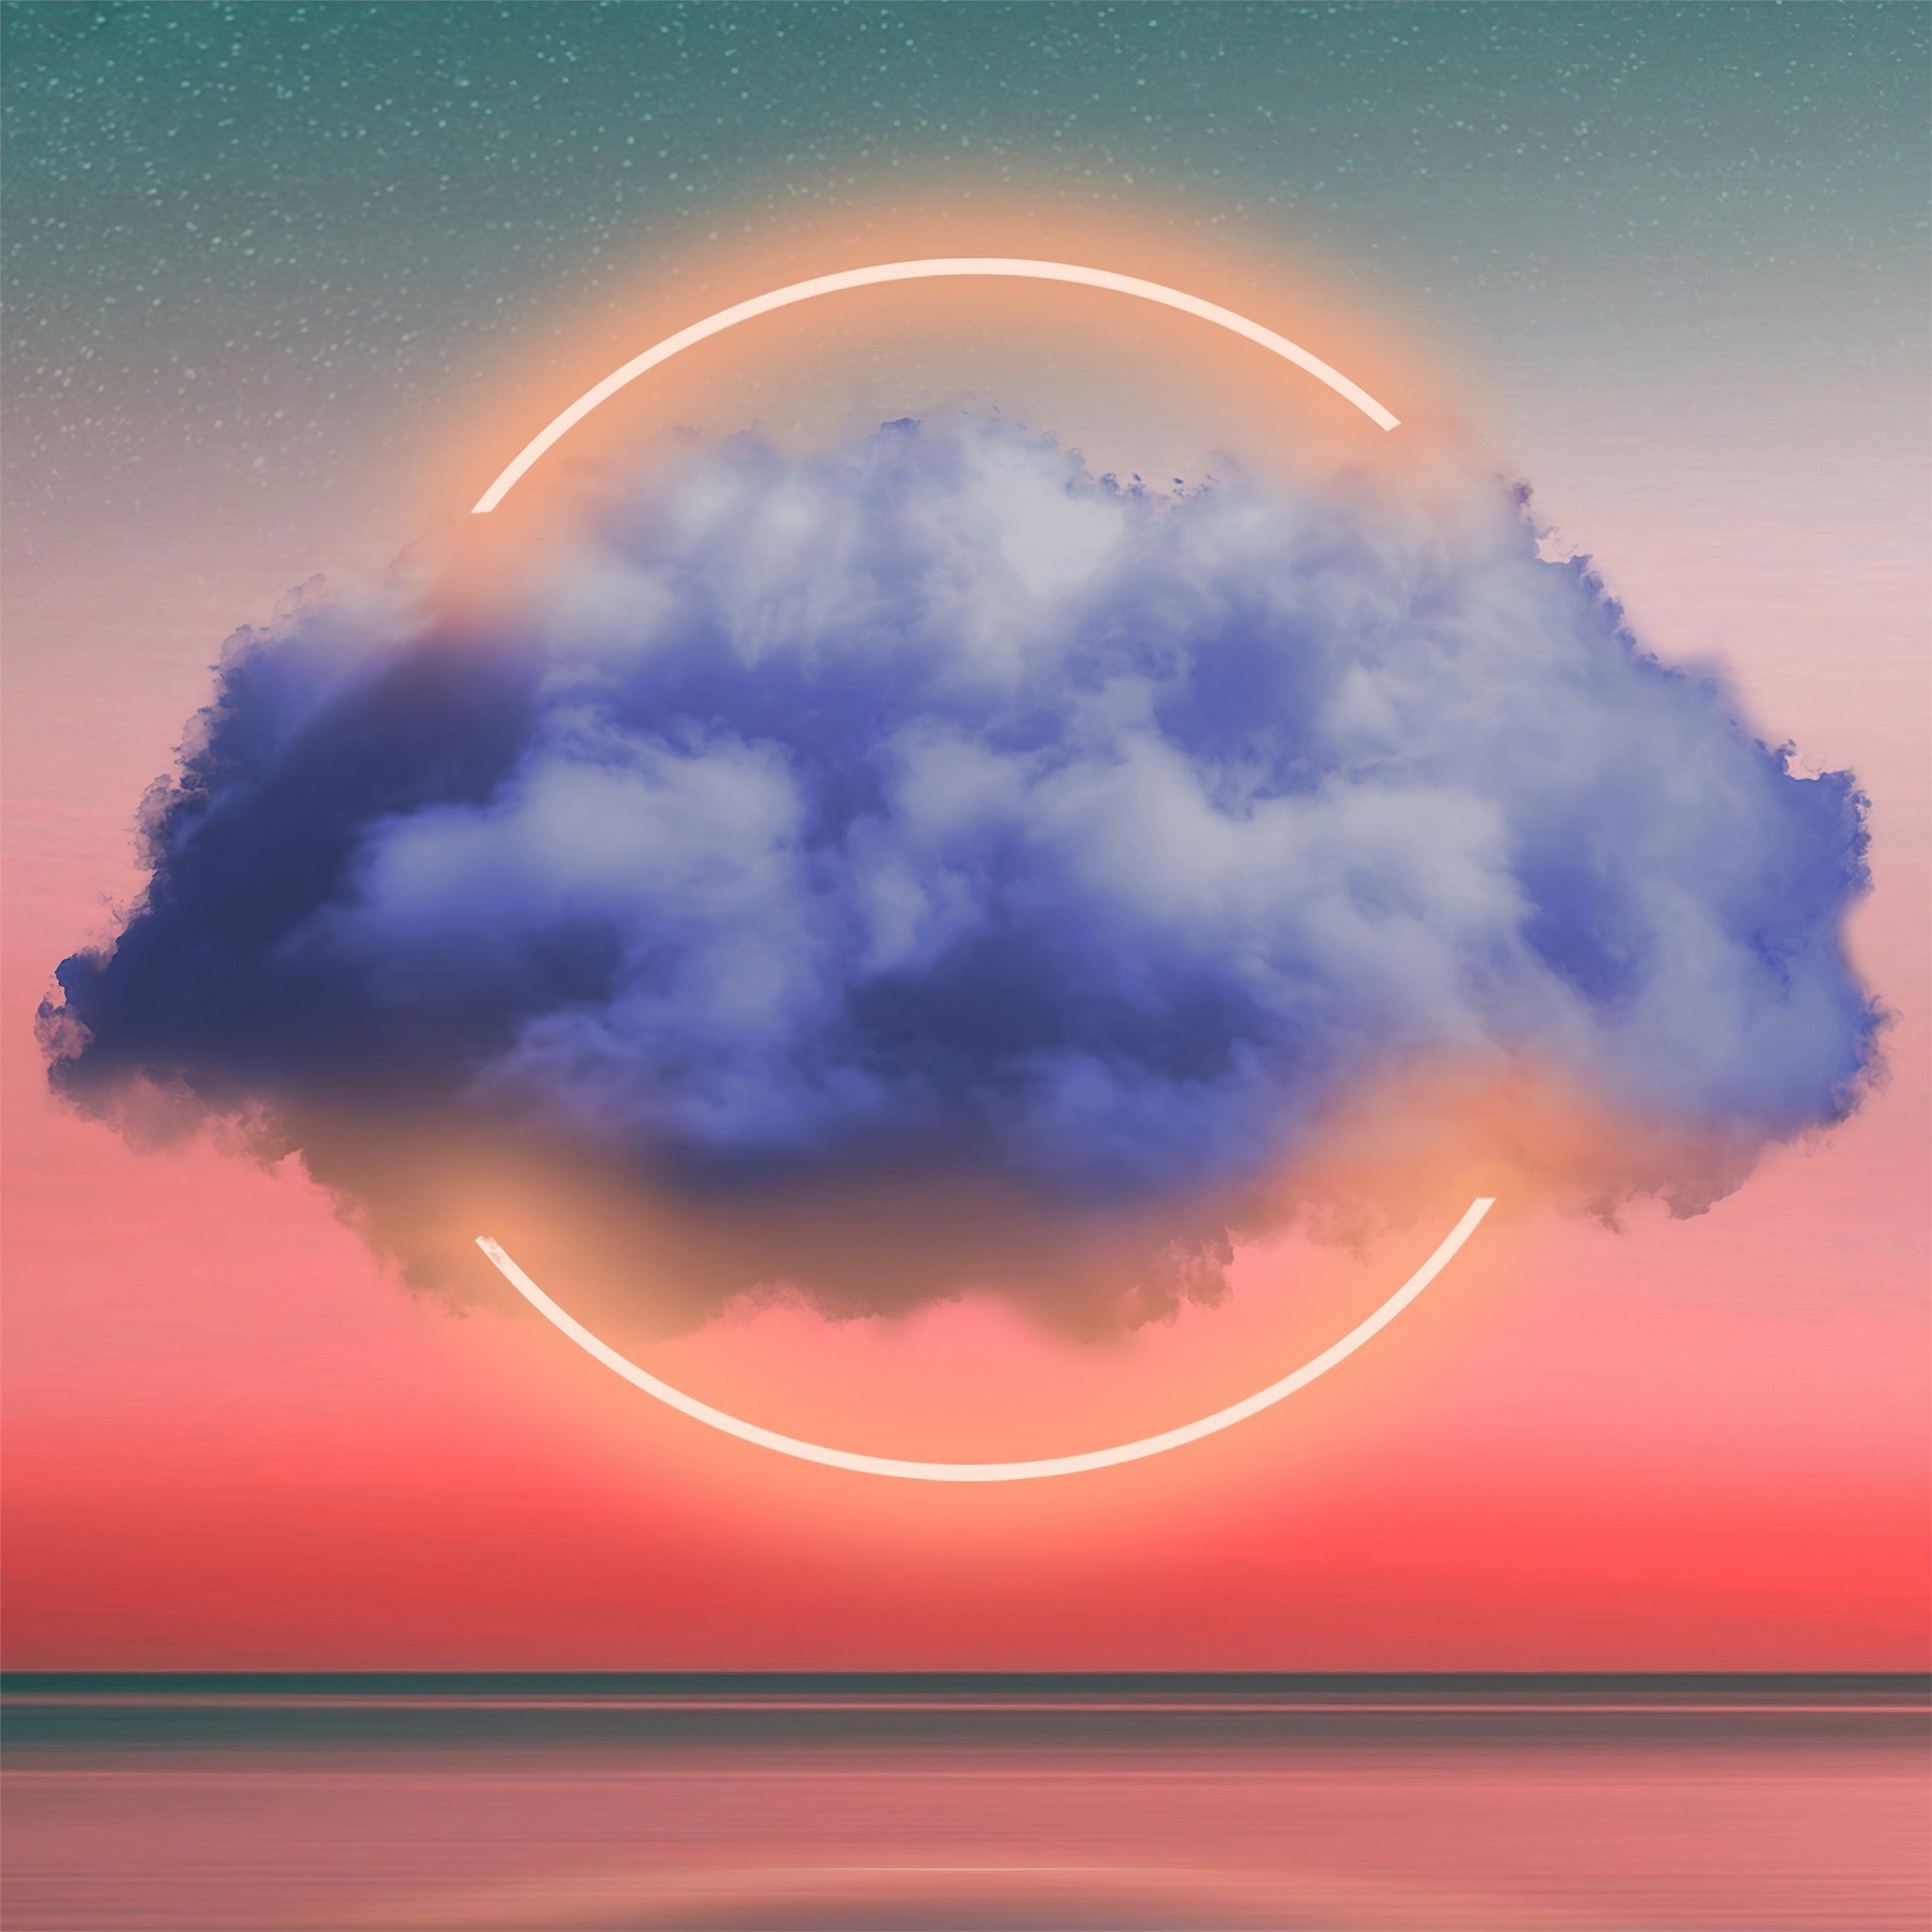 clouds neon light circle 5k iPad Pro Wallpaper Free Download